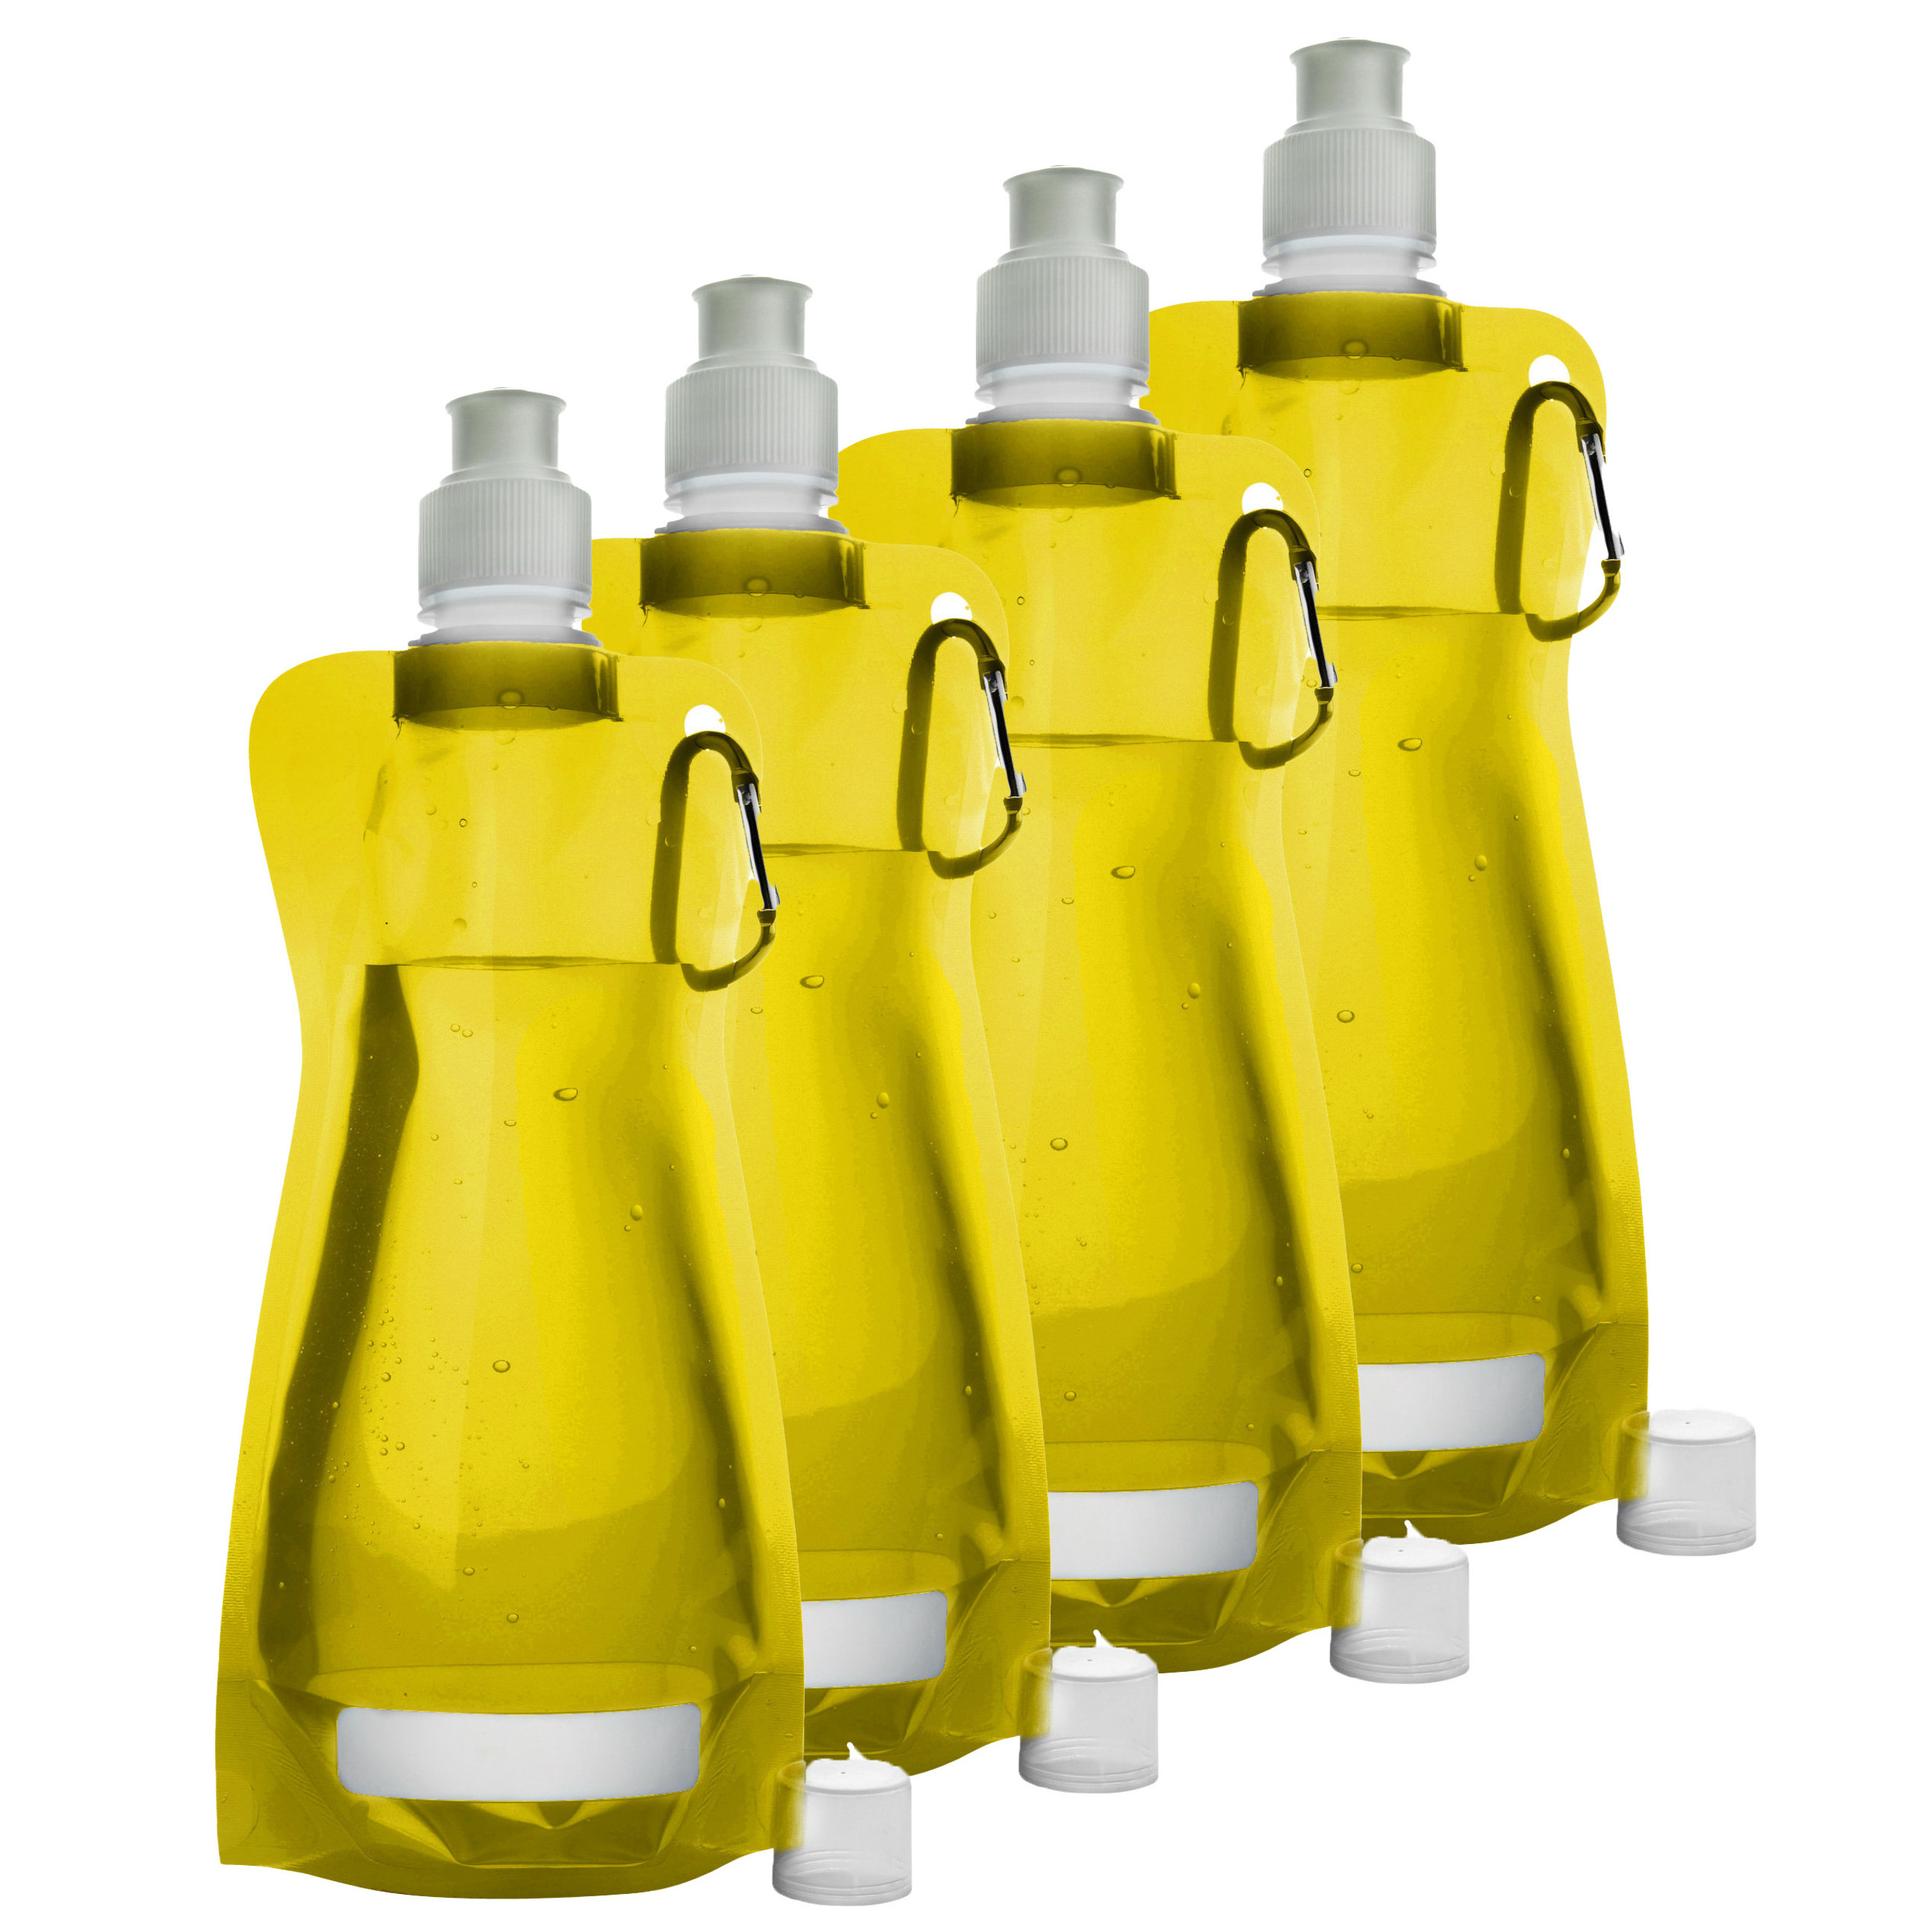 Waterfles-drinkfles opvouwbaar 4x geel kunststof 420 ml schroefdop karabijnhaak